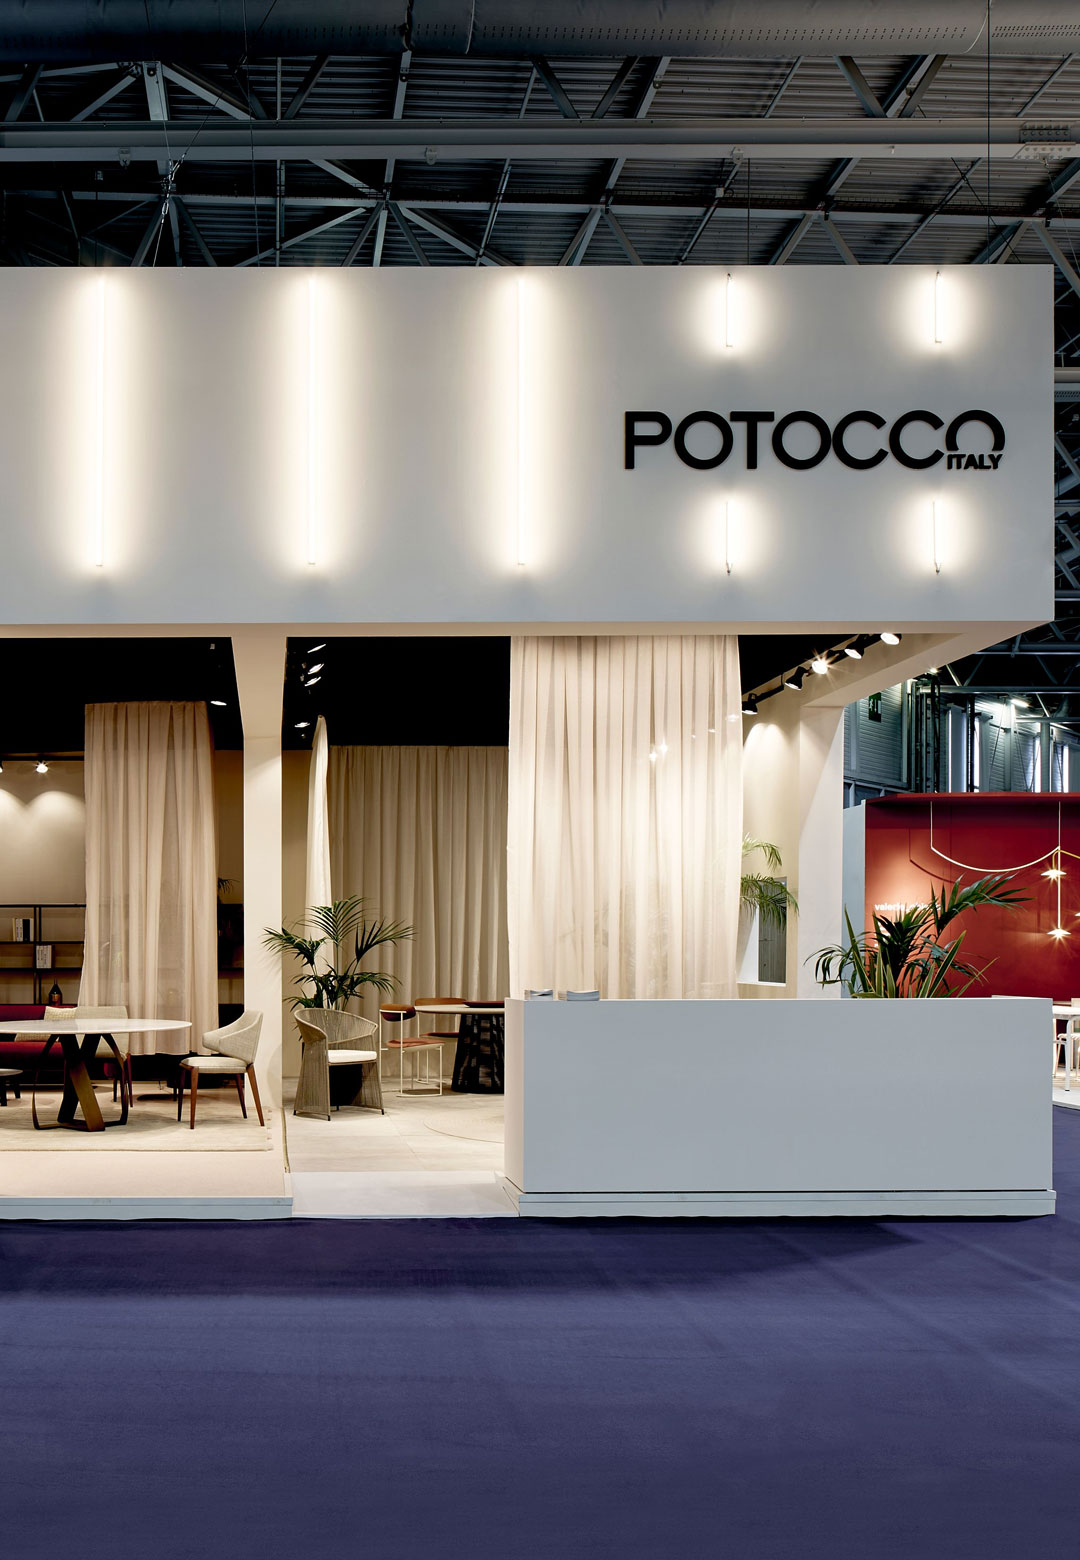 Potocco exhibits a Mediterranean indoor-outdoor concept at the Maison&Objet Fair